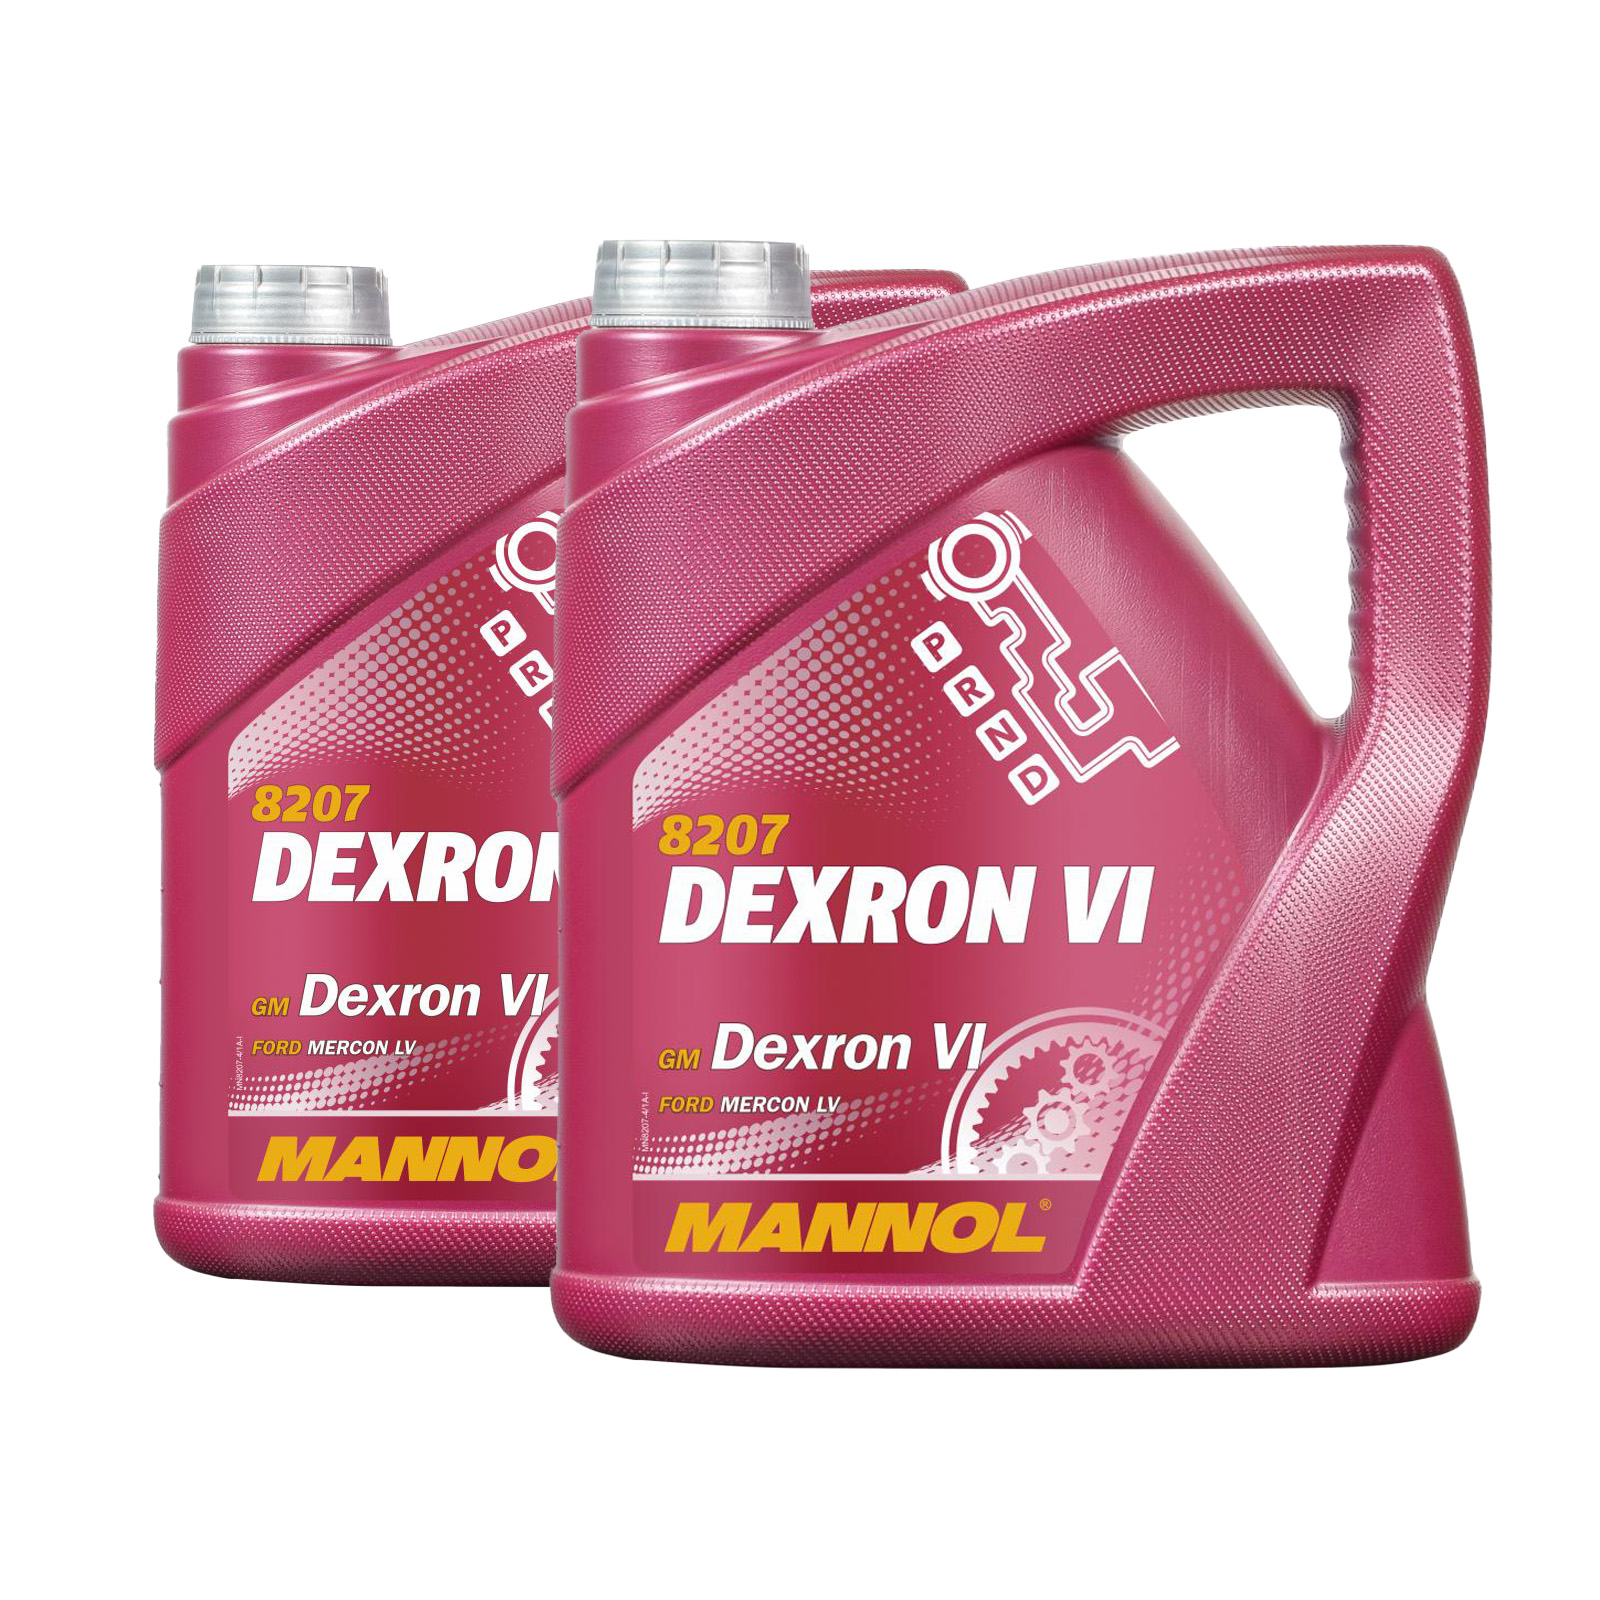 8 Liter (2x4) MANNOL Dexron VI Getriebeöl Automatikgetriebe Öl Ford Mercon LV GM